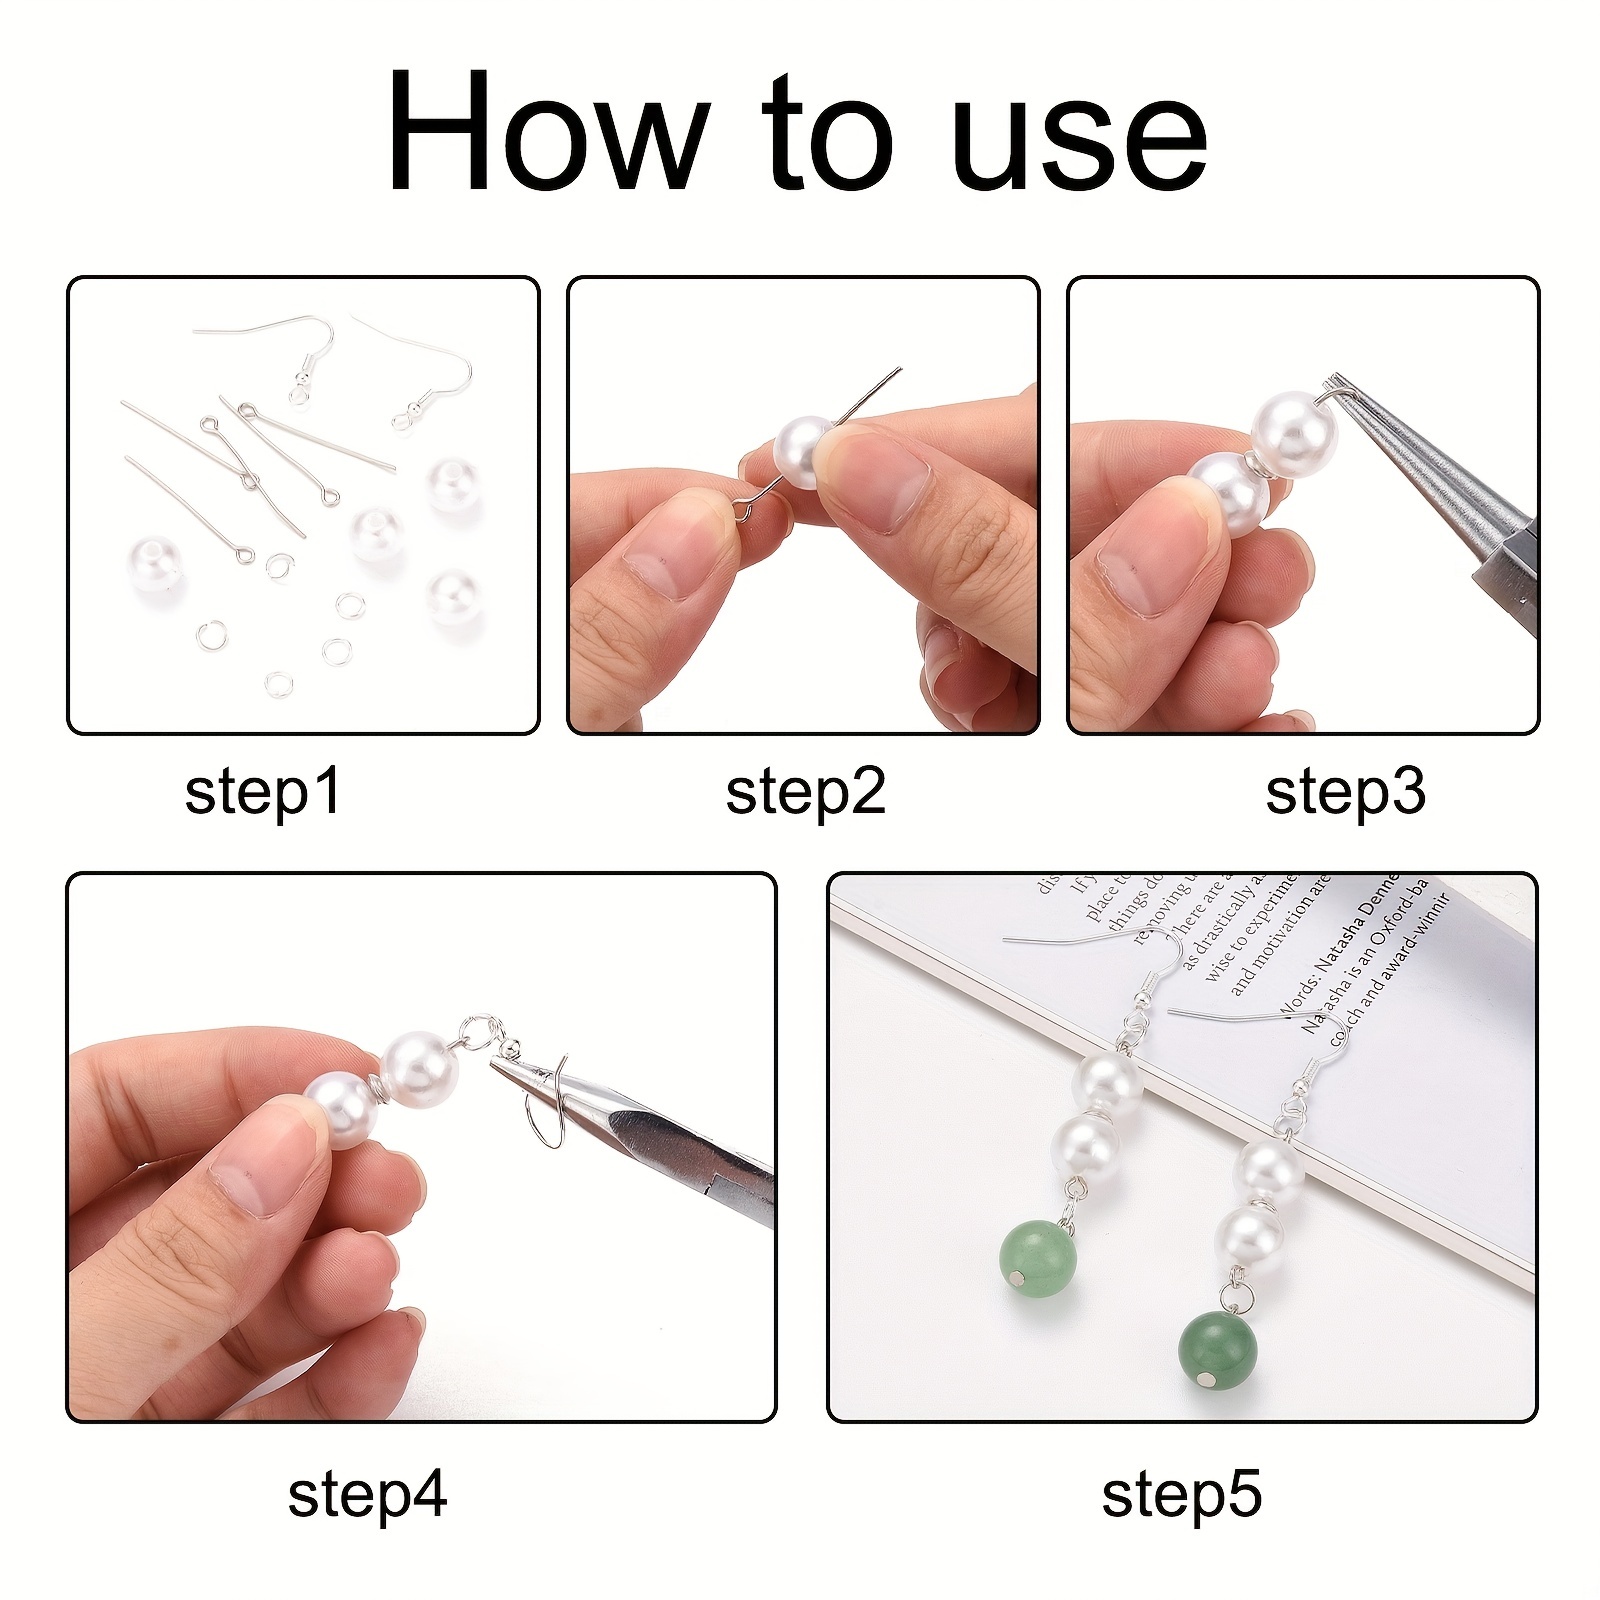 How To Use Headpins & Eyepins 